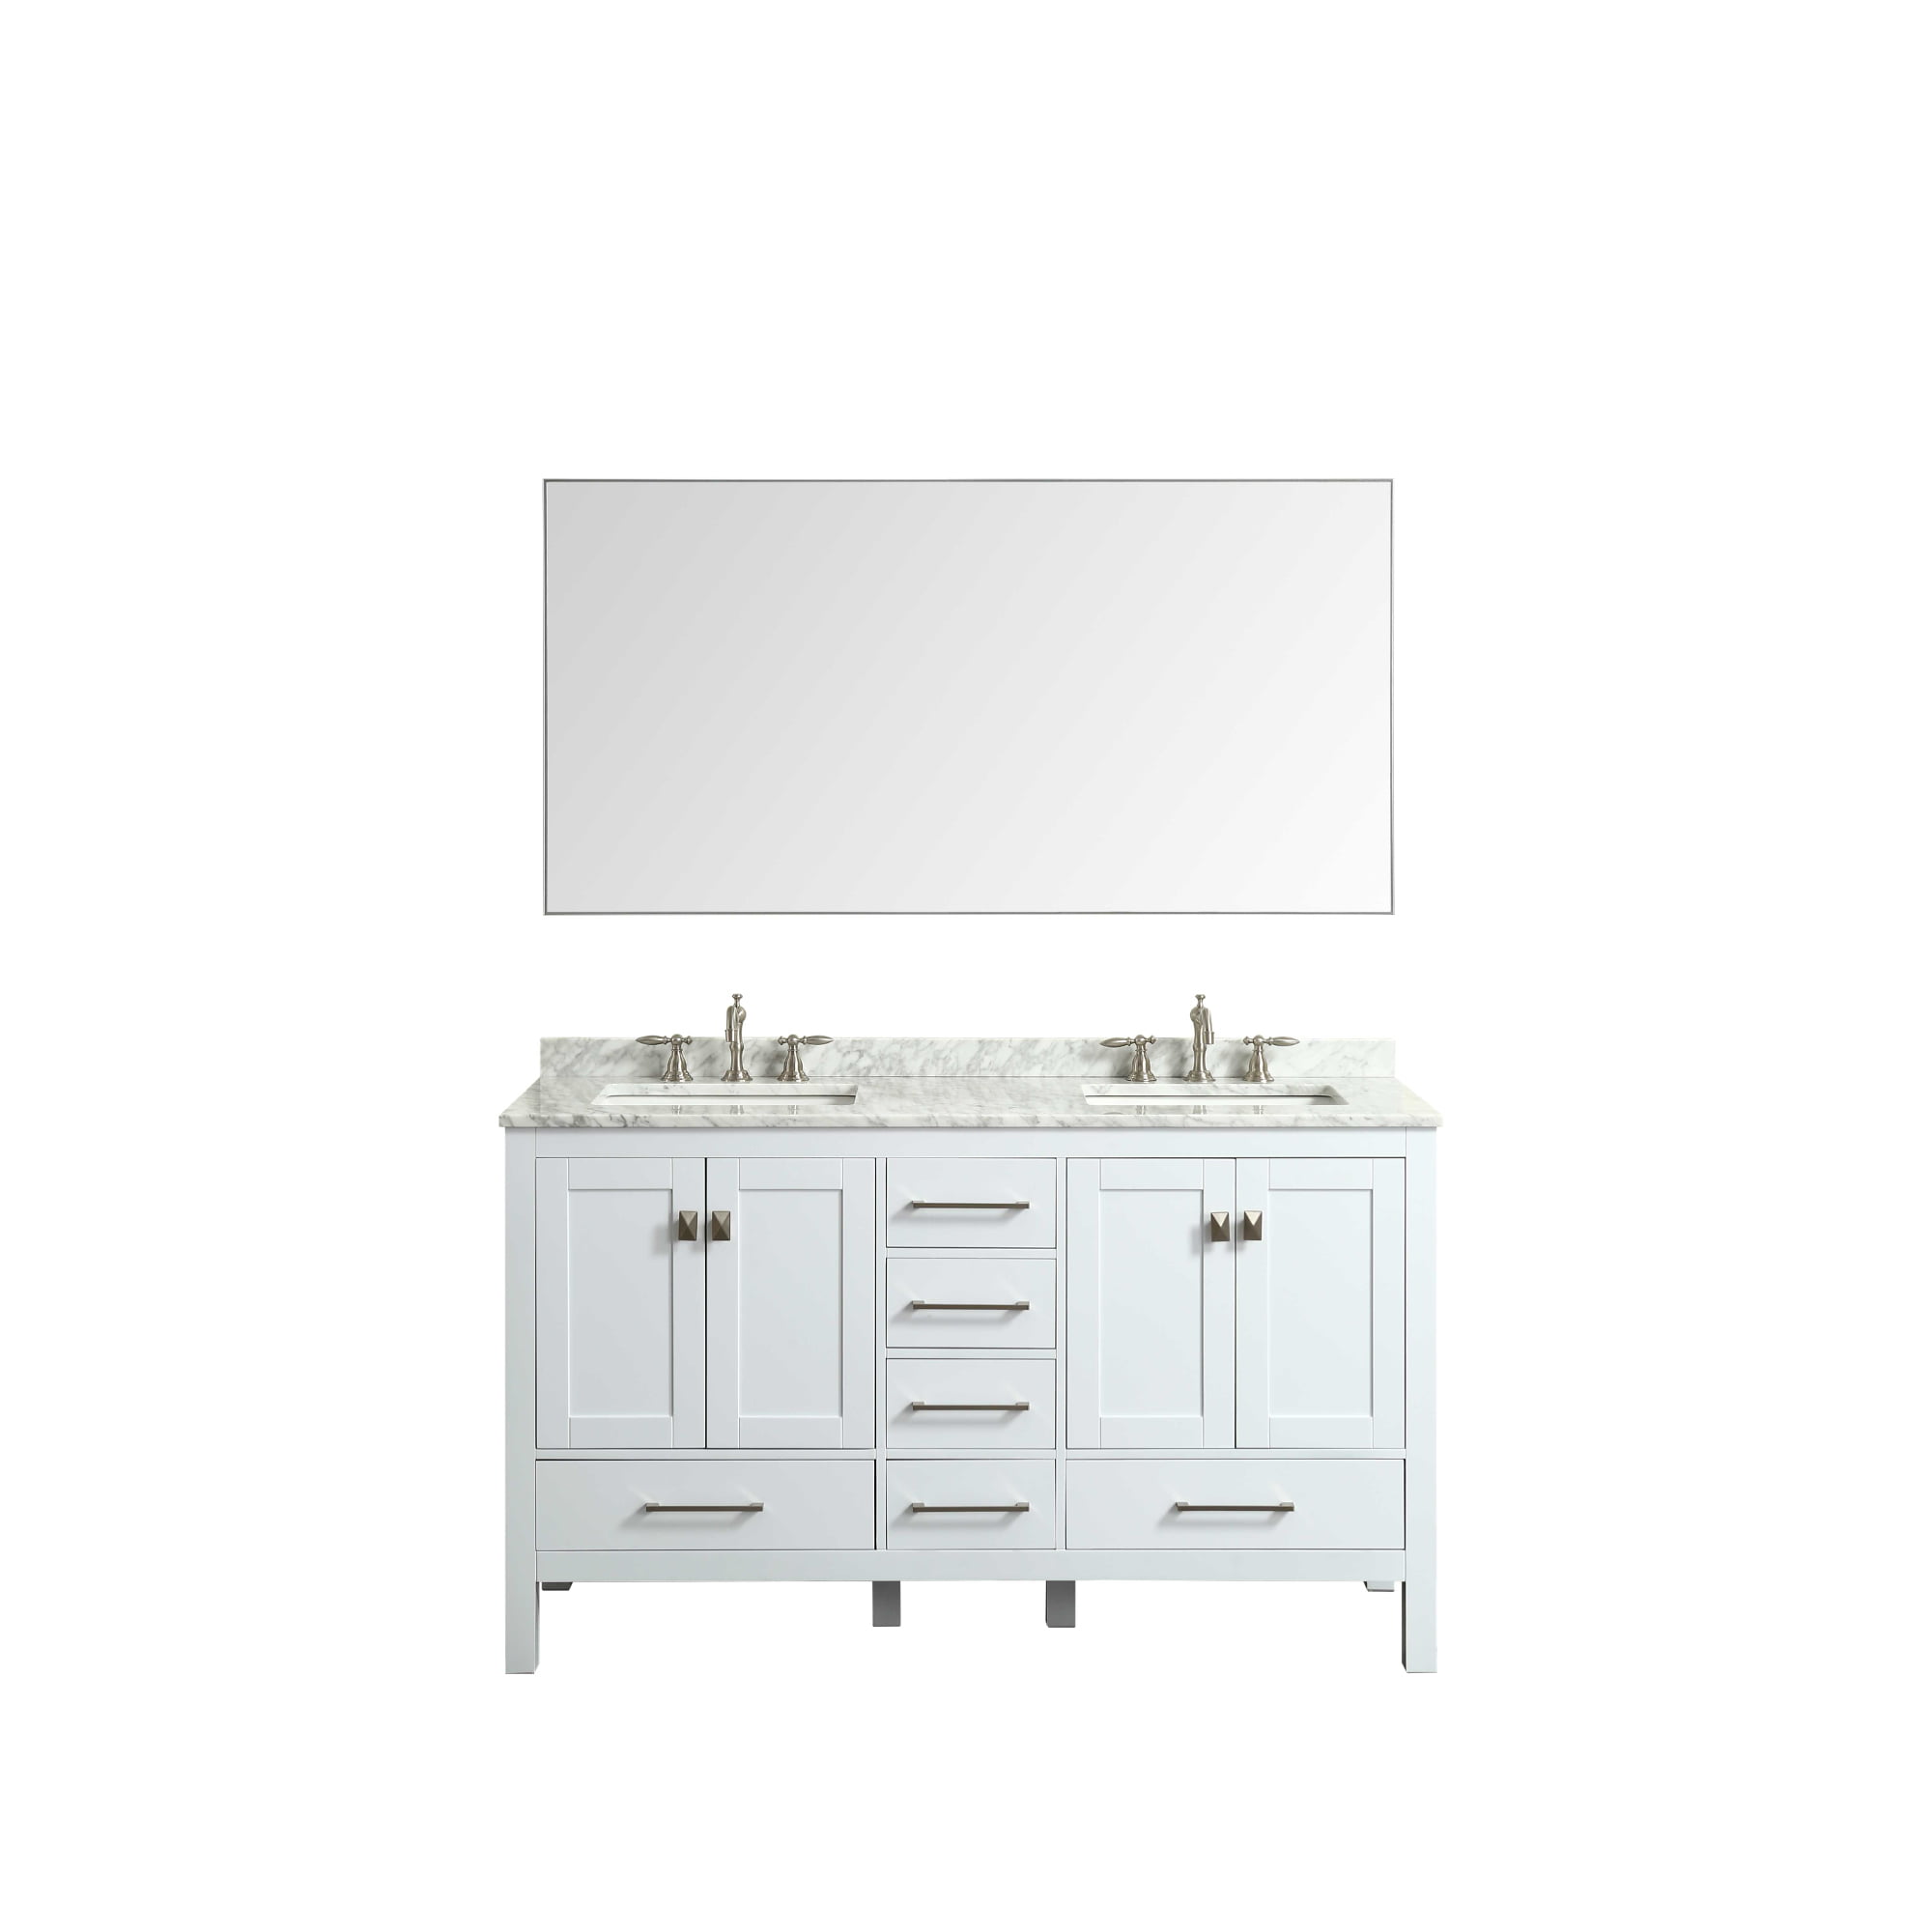 Eviva Sax 60 Brushed Chrome Metal, 60 Inch Framed Bathroom Mirror White